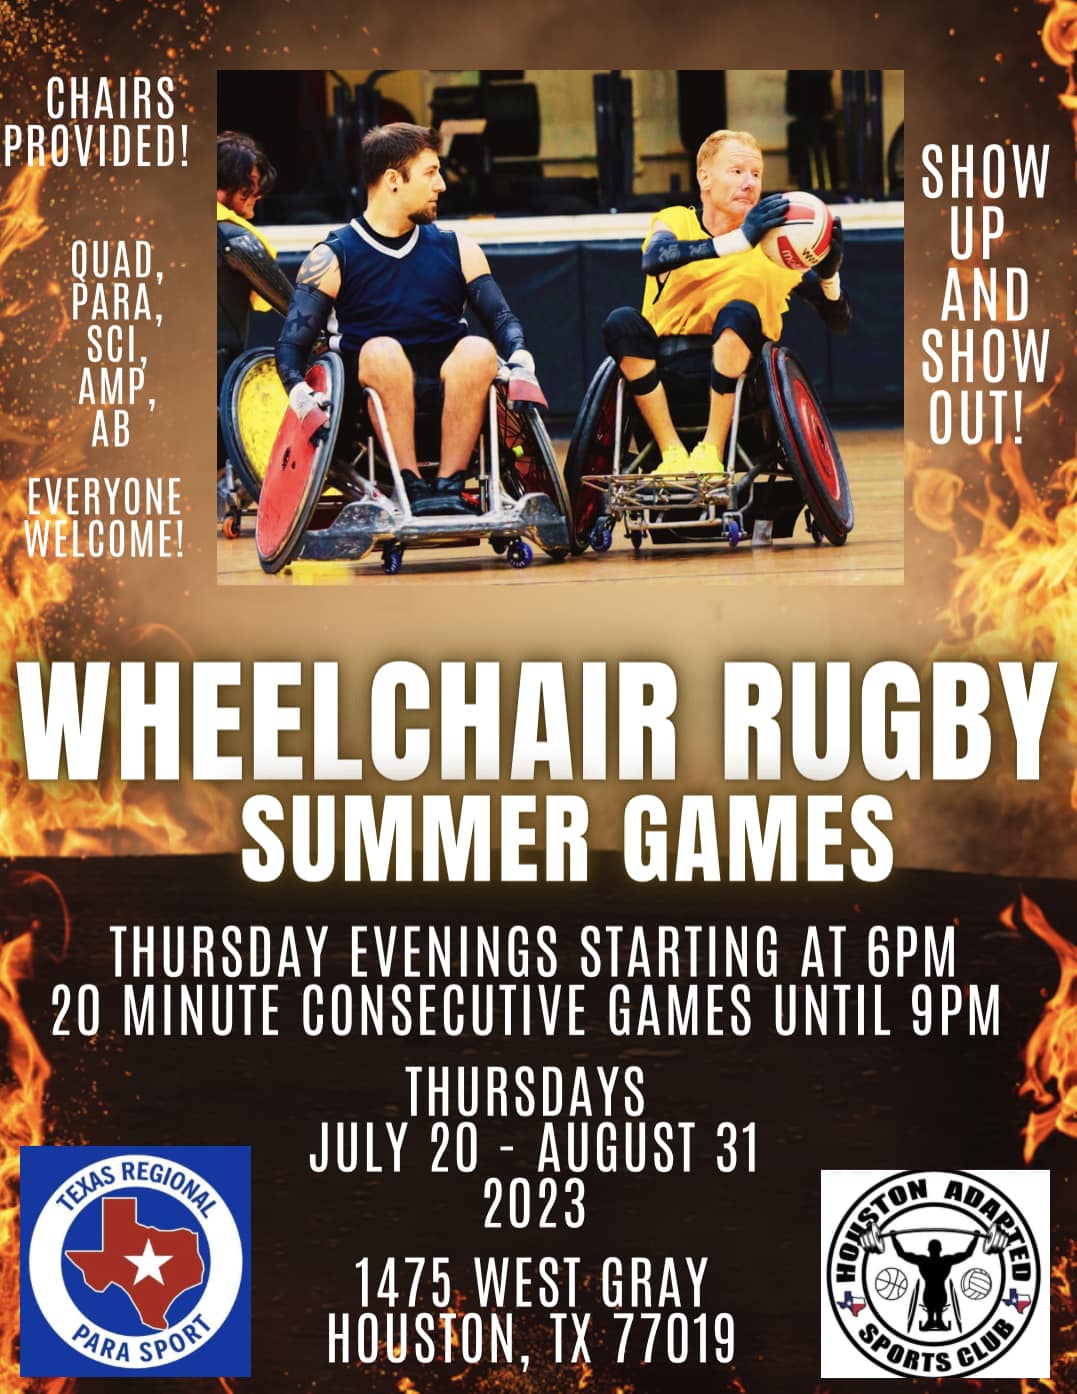 Houston Wheelchair Rugby Summer Games Texas Regional Para Sports